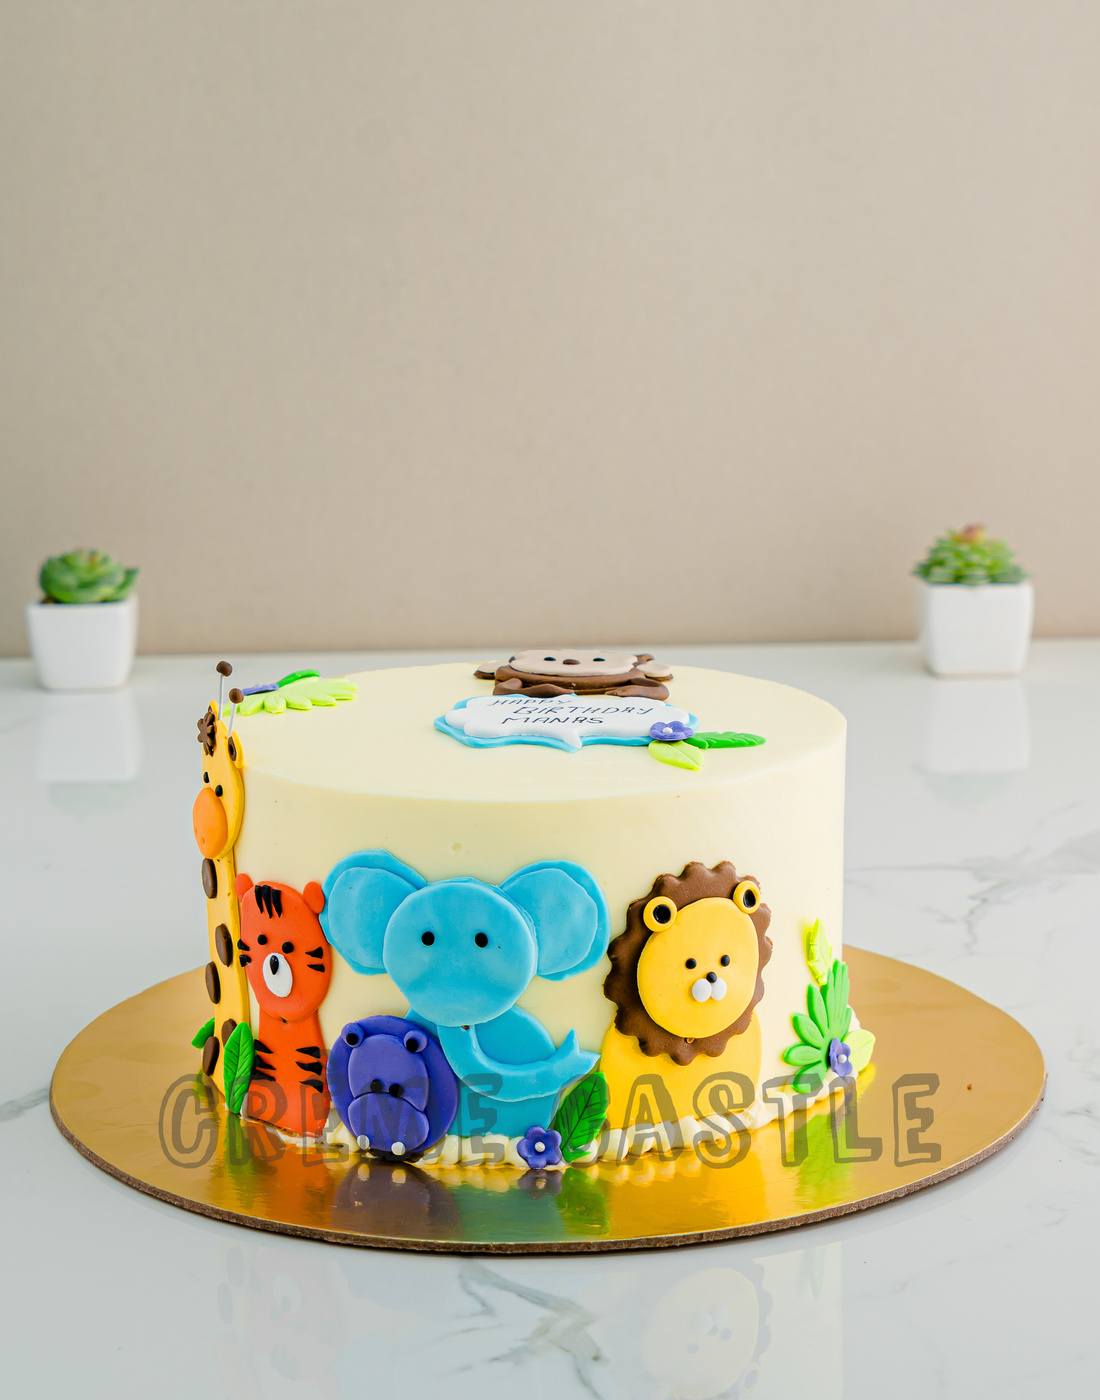 Jungle Animals Cakes, Birthday Cakes in Dubai